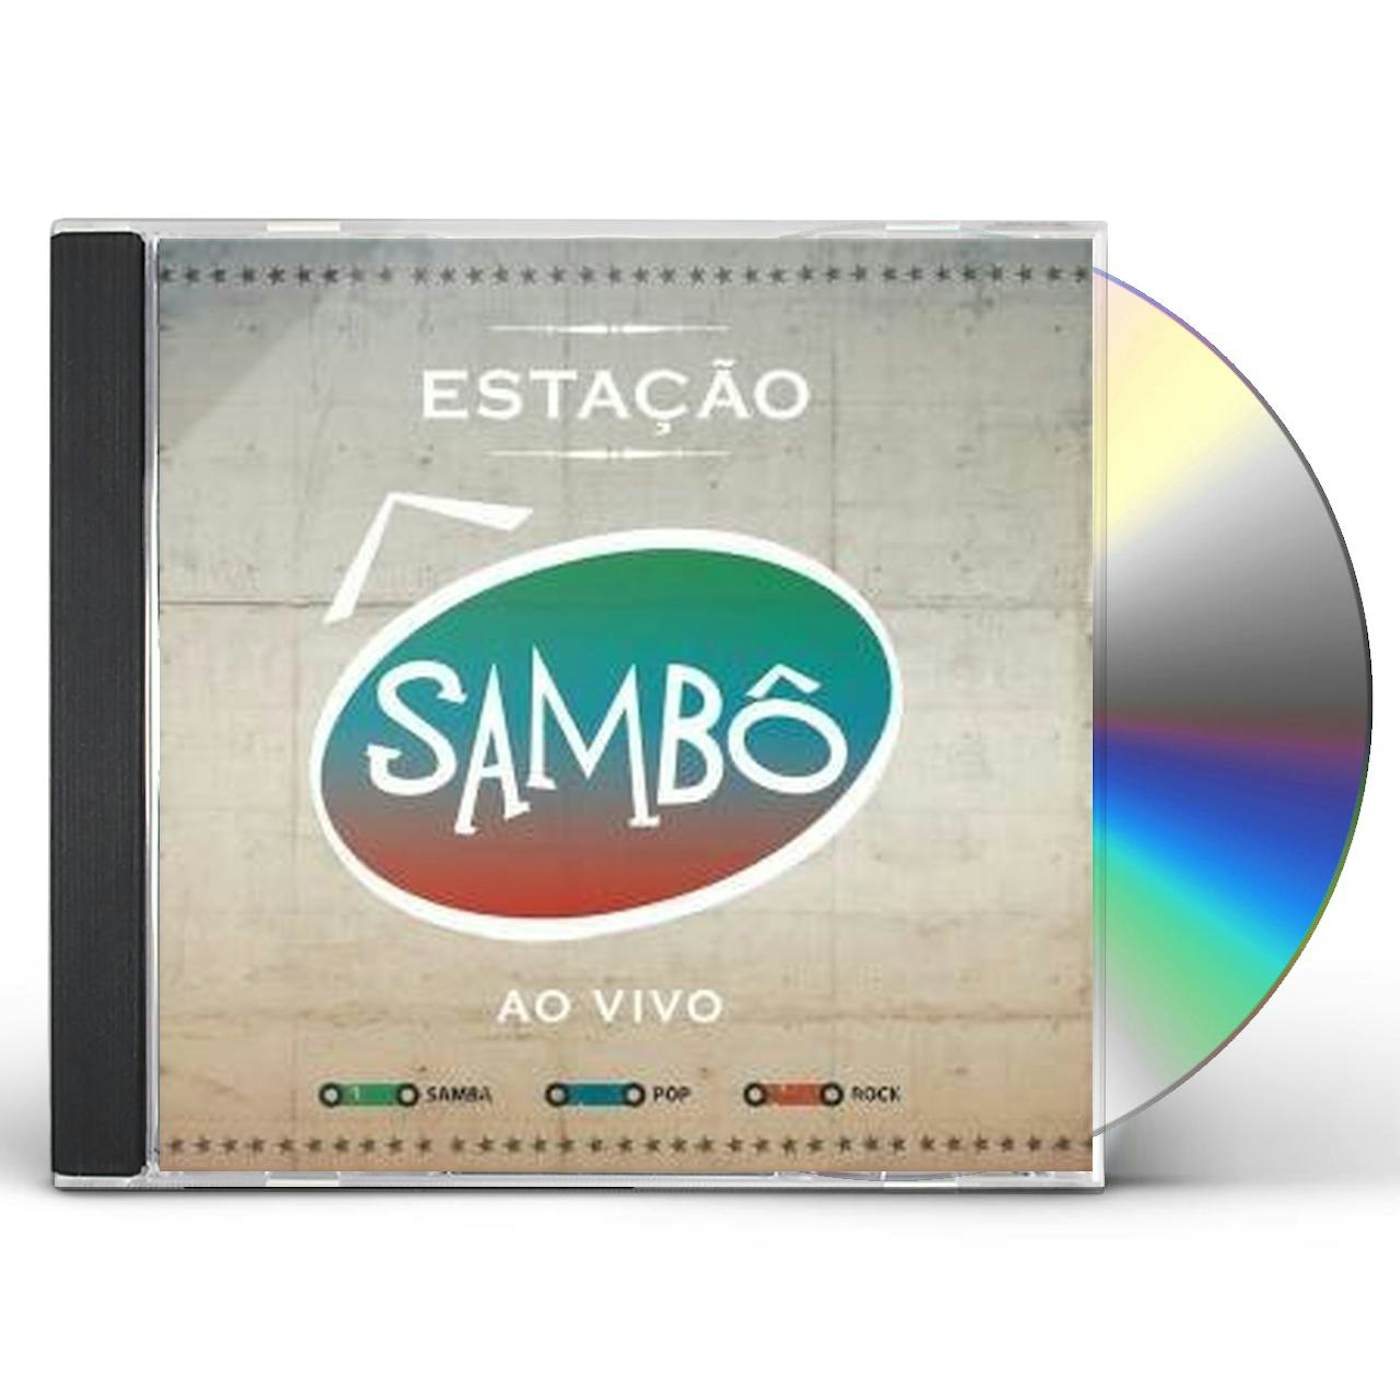 ESTACAO SAMBO CD